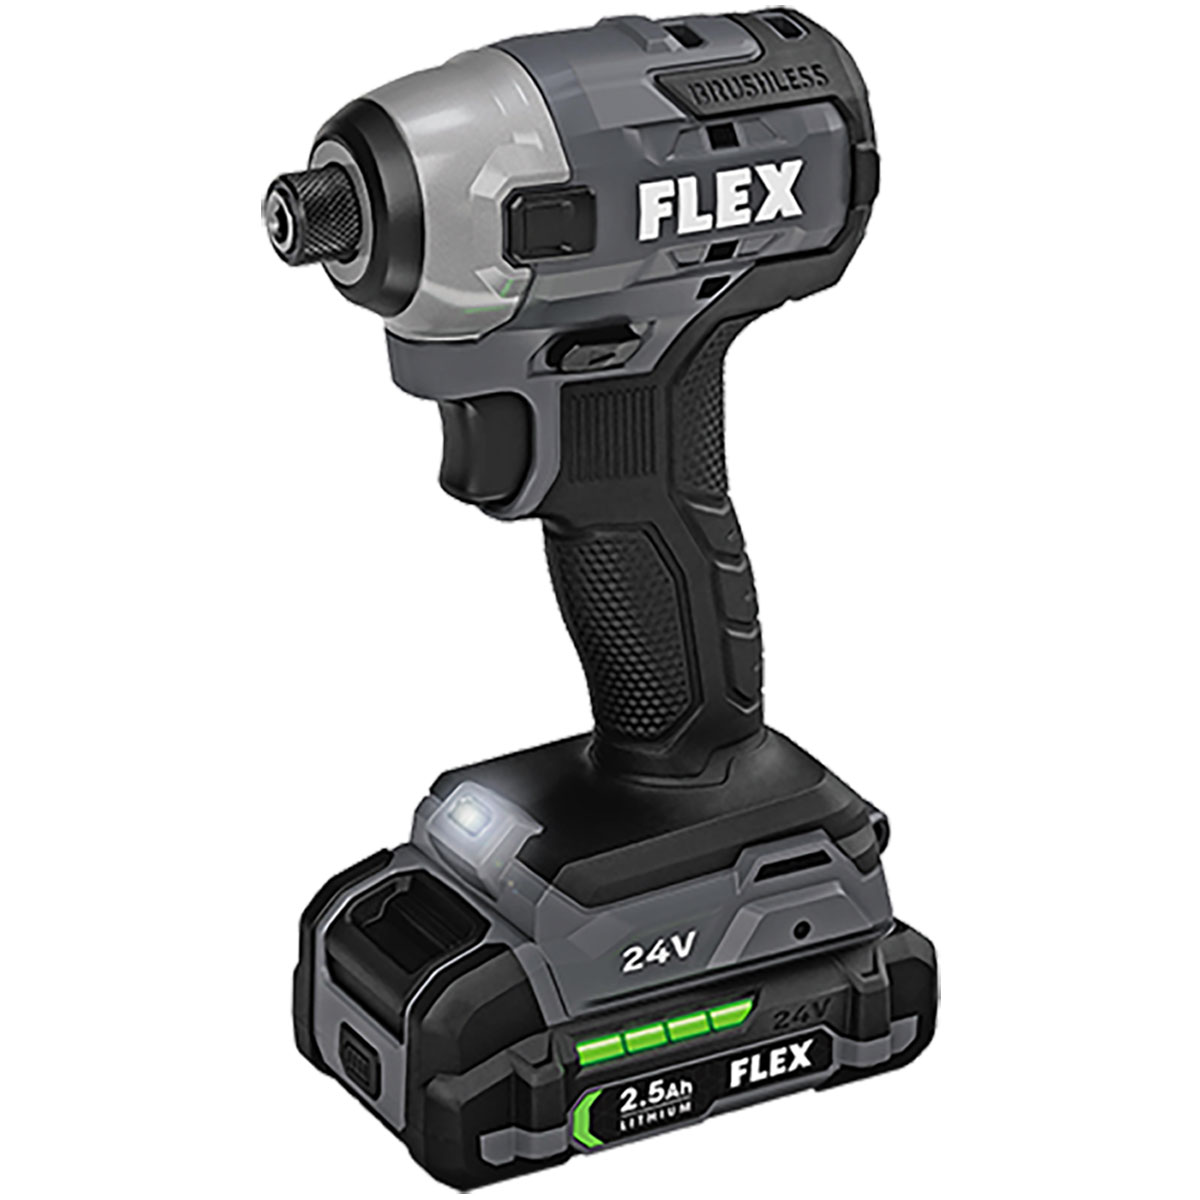 Flex 24V Drill and Impact Combo